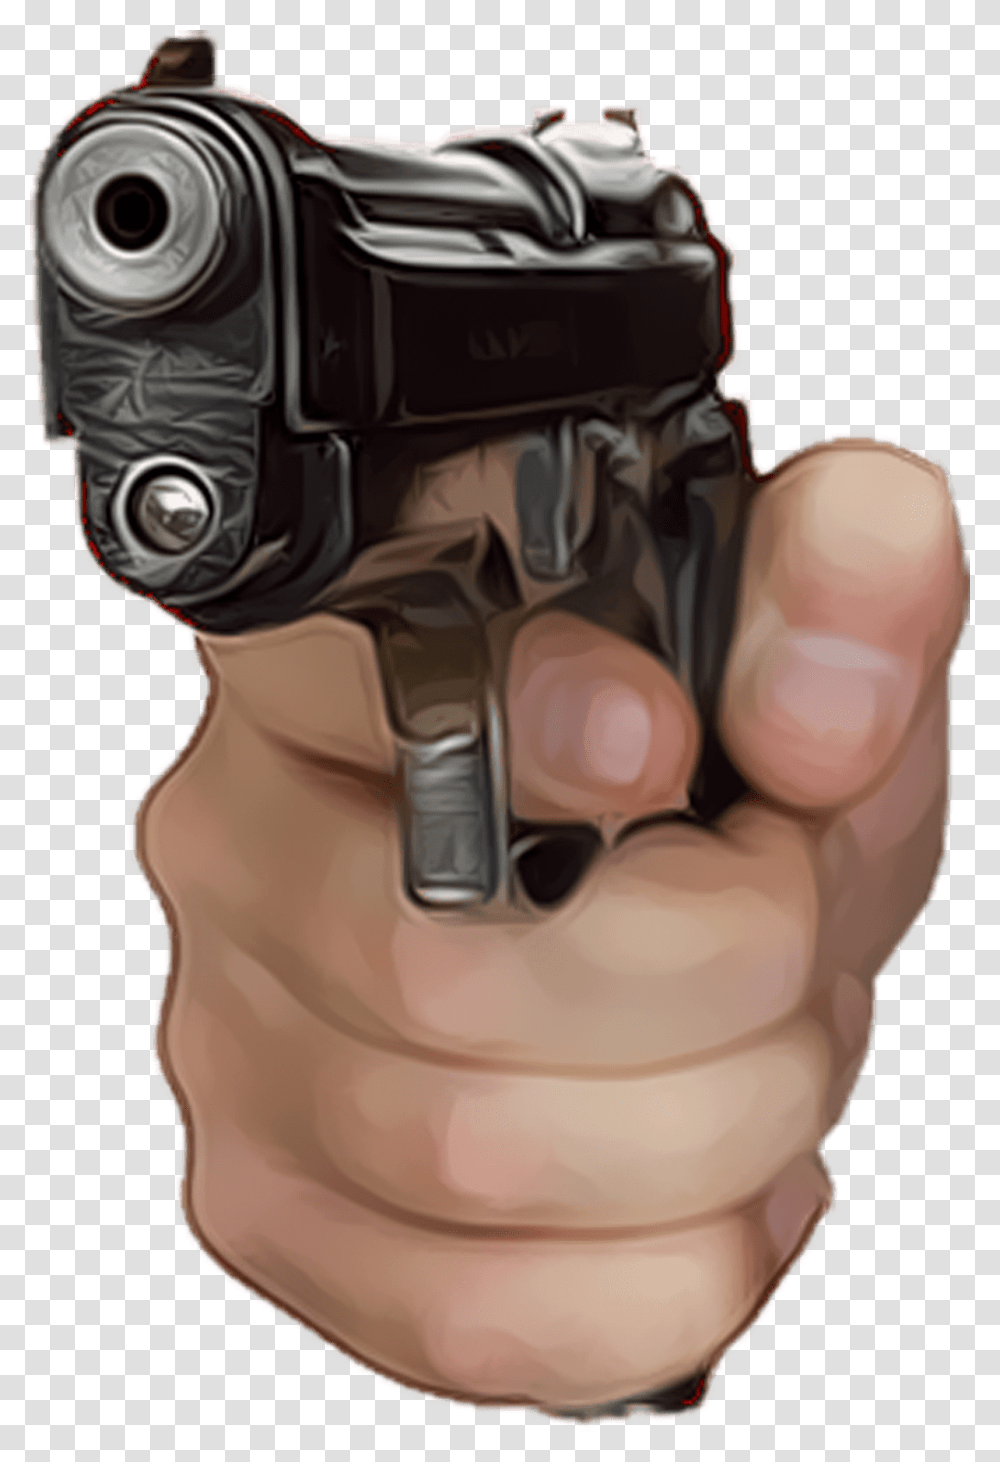 Gun In Hand Clipart Hand Gun, Handgun, Weapon, Weaponry, Helmet Transparent Png